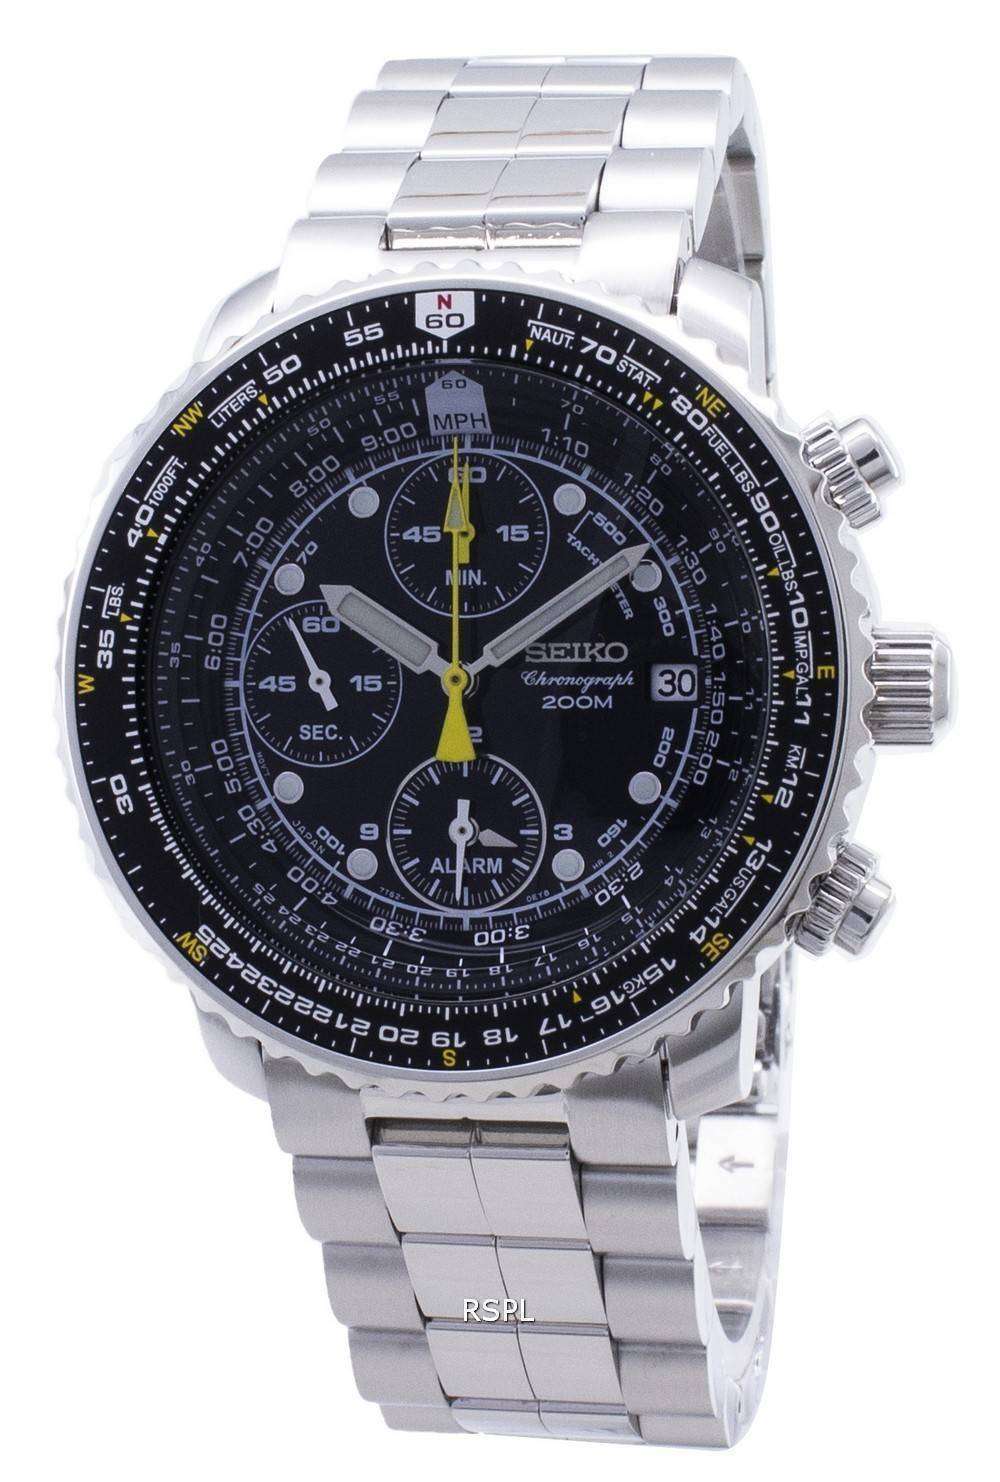 Seiko Alarm Chronograph Pilots Flightmaster SNA411P1 Watch - CityWatches.ie